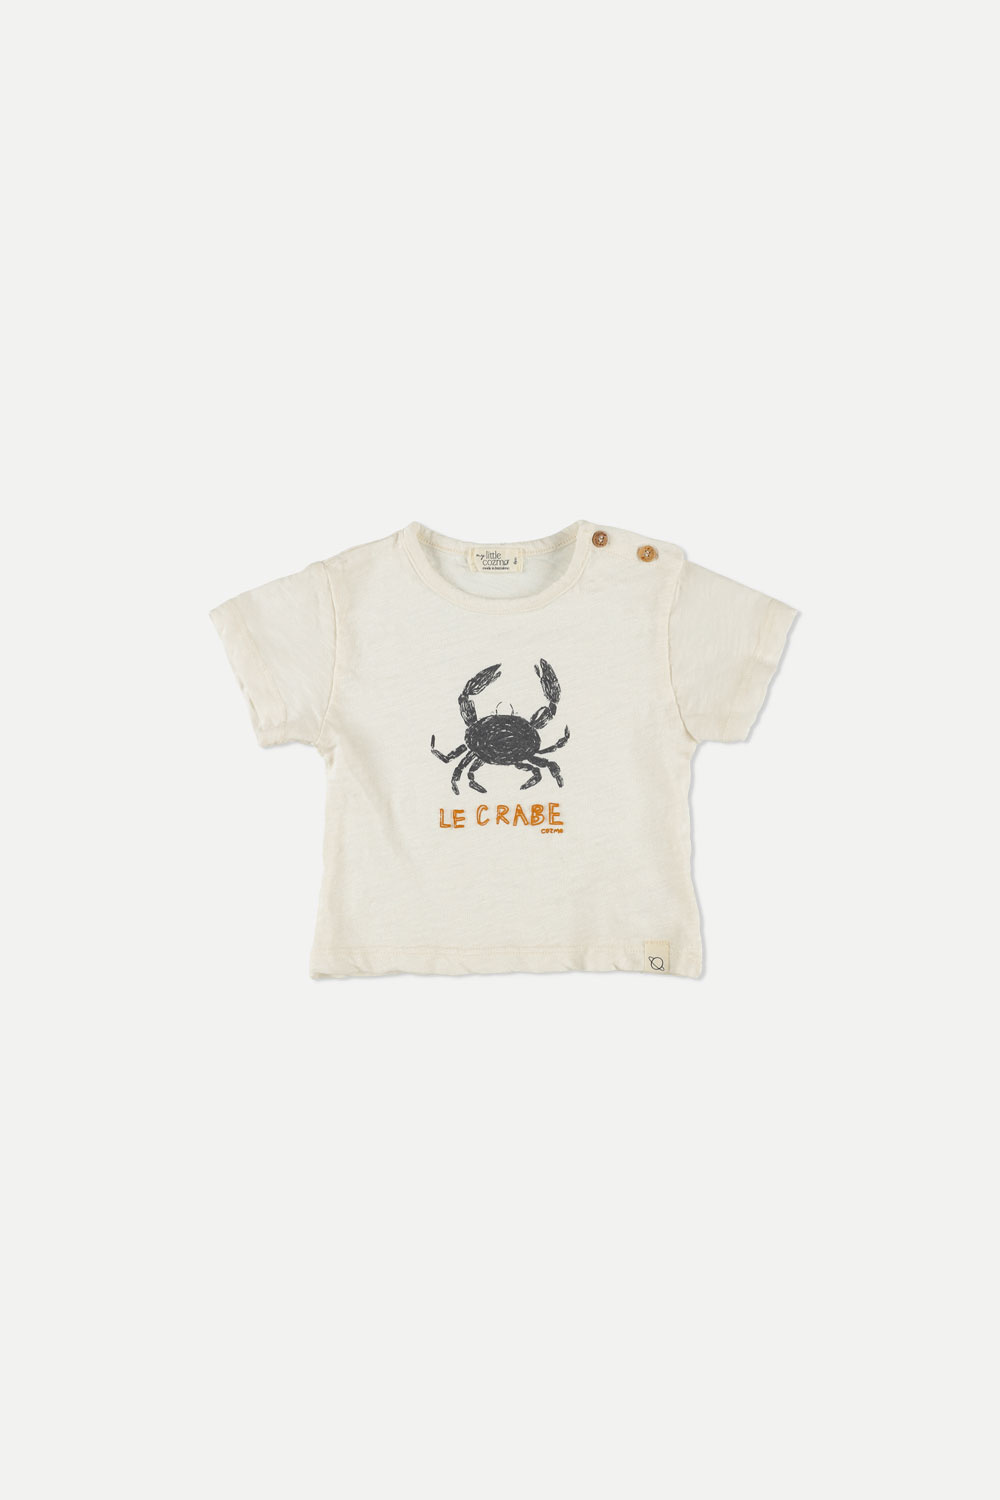 My Little Cozmo Organic Light Slub Print  Crabe Baby T-shirt | Ivory